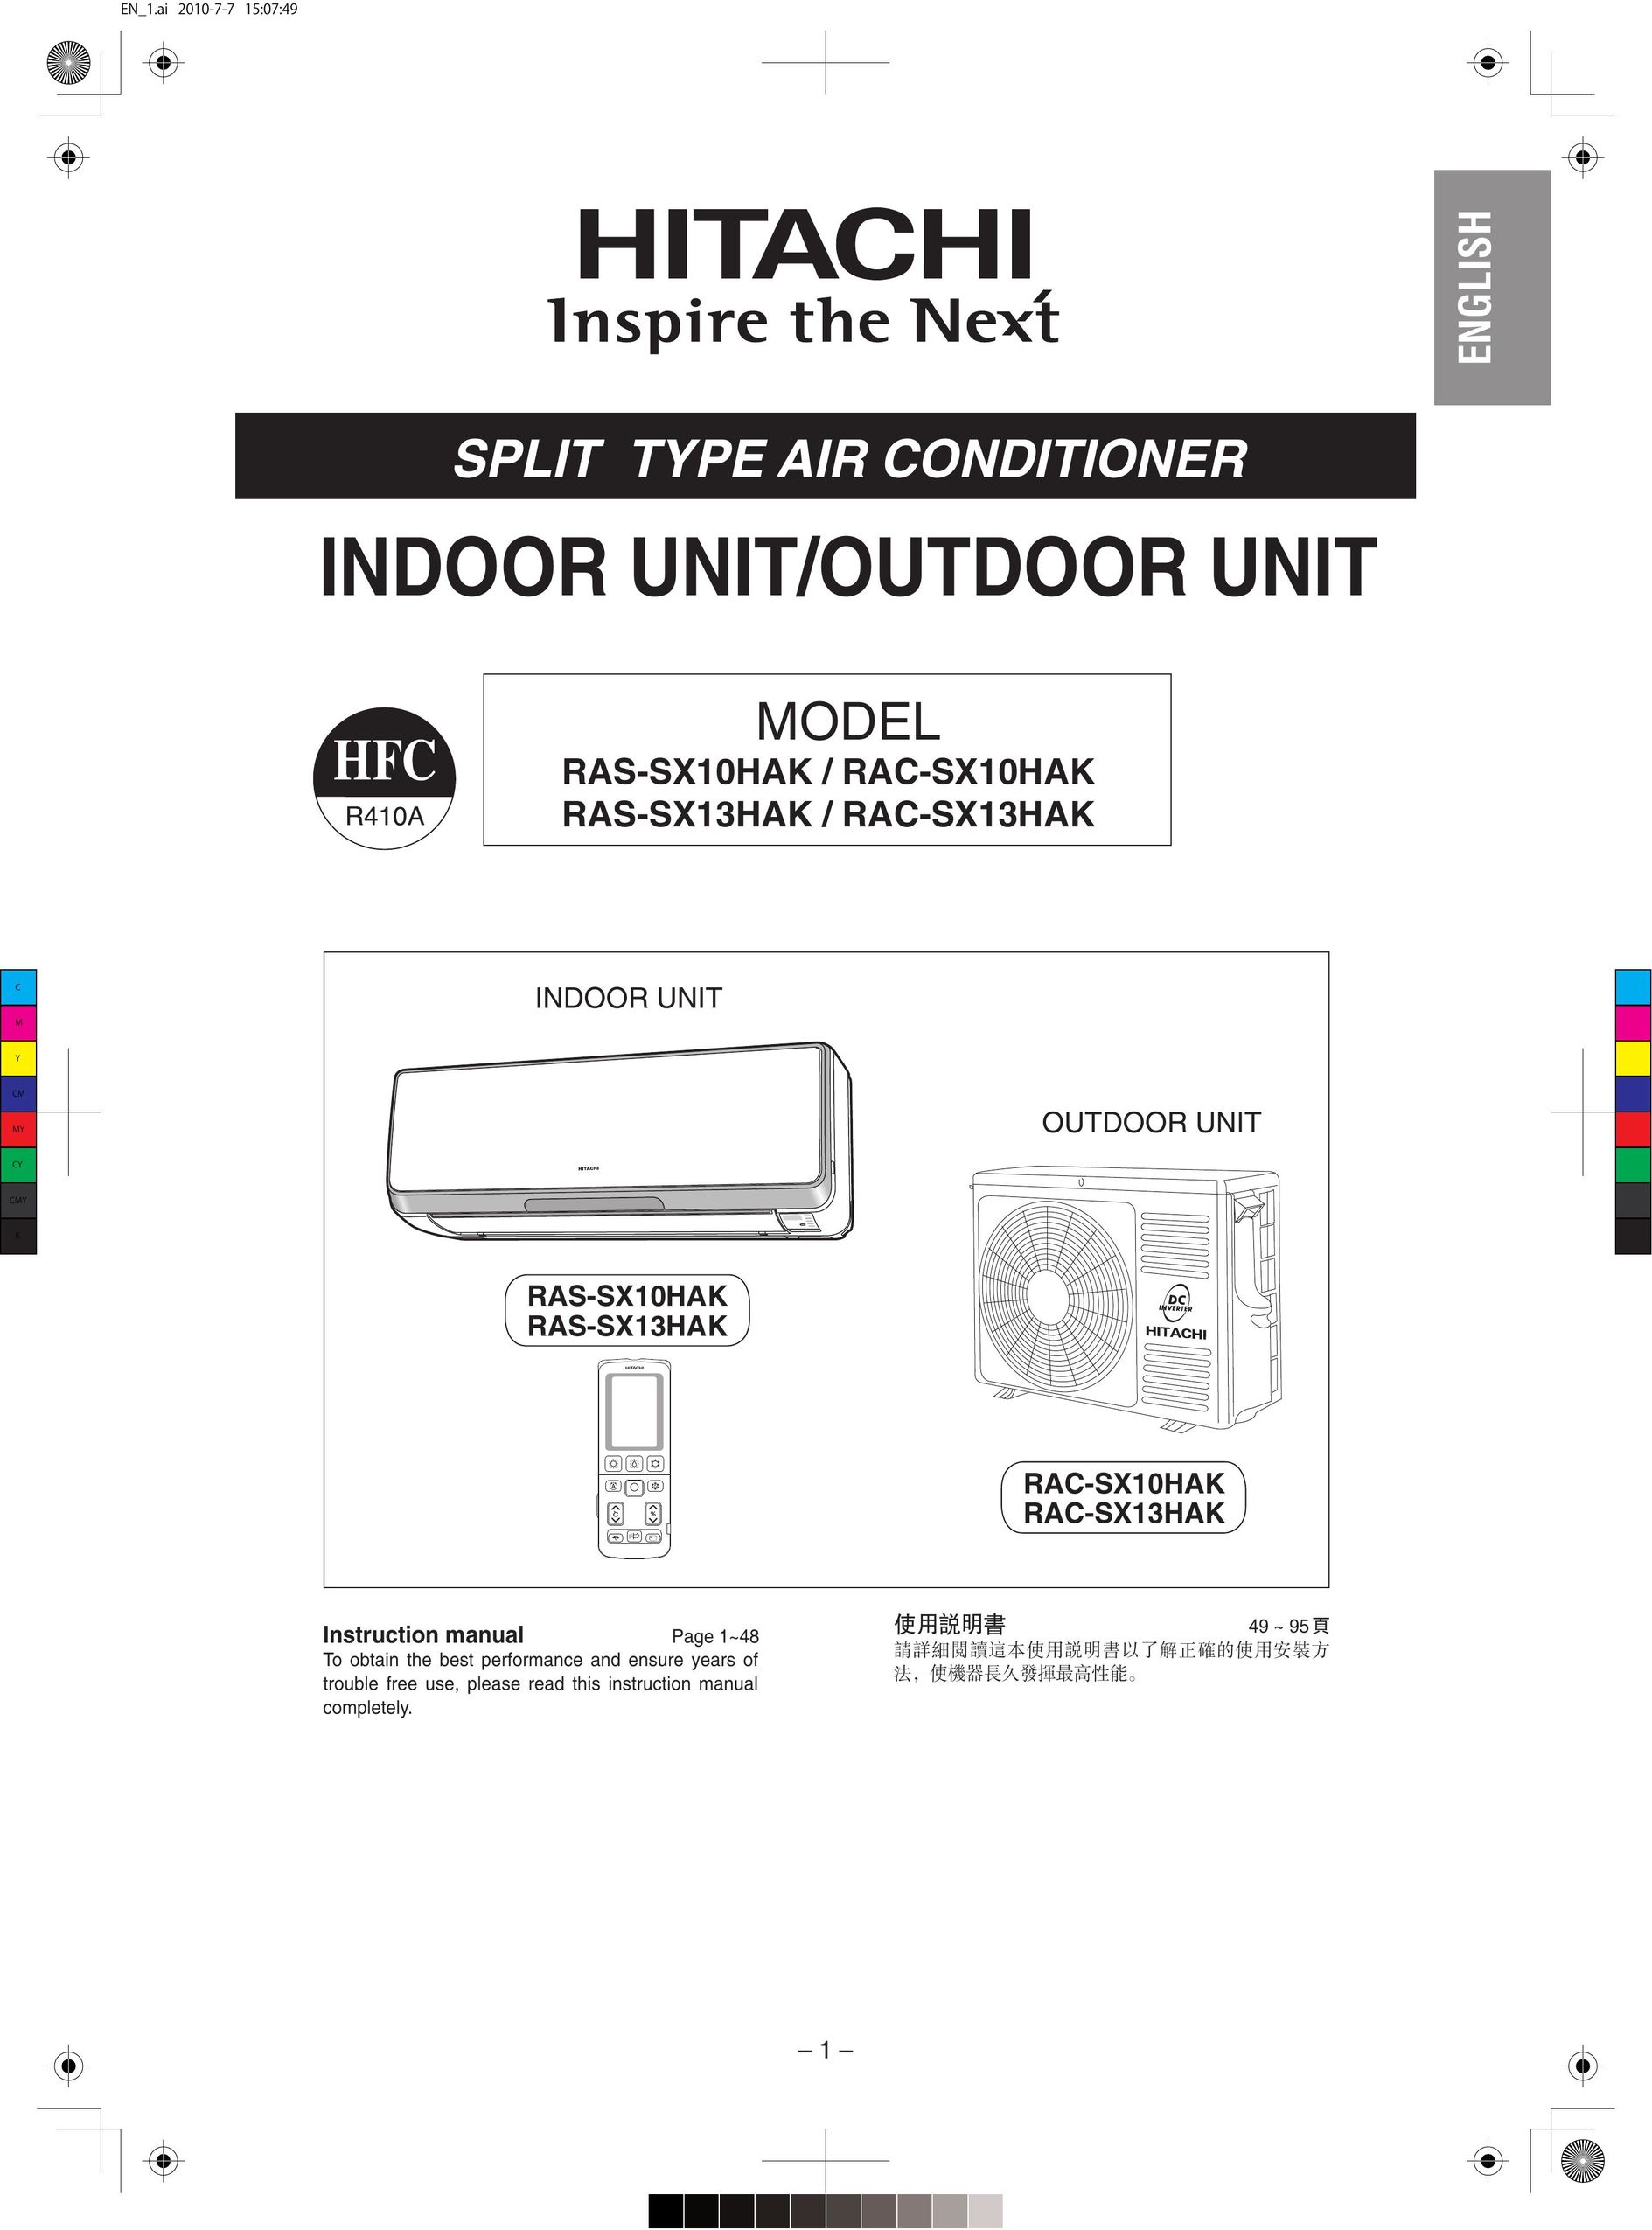 Hitachi RAS-SX10HAK / RAC-SX10HAK Air Conditioner User Manual